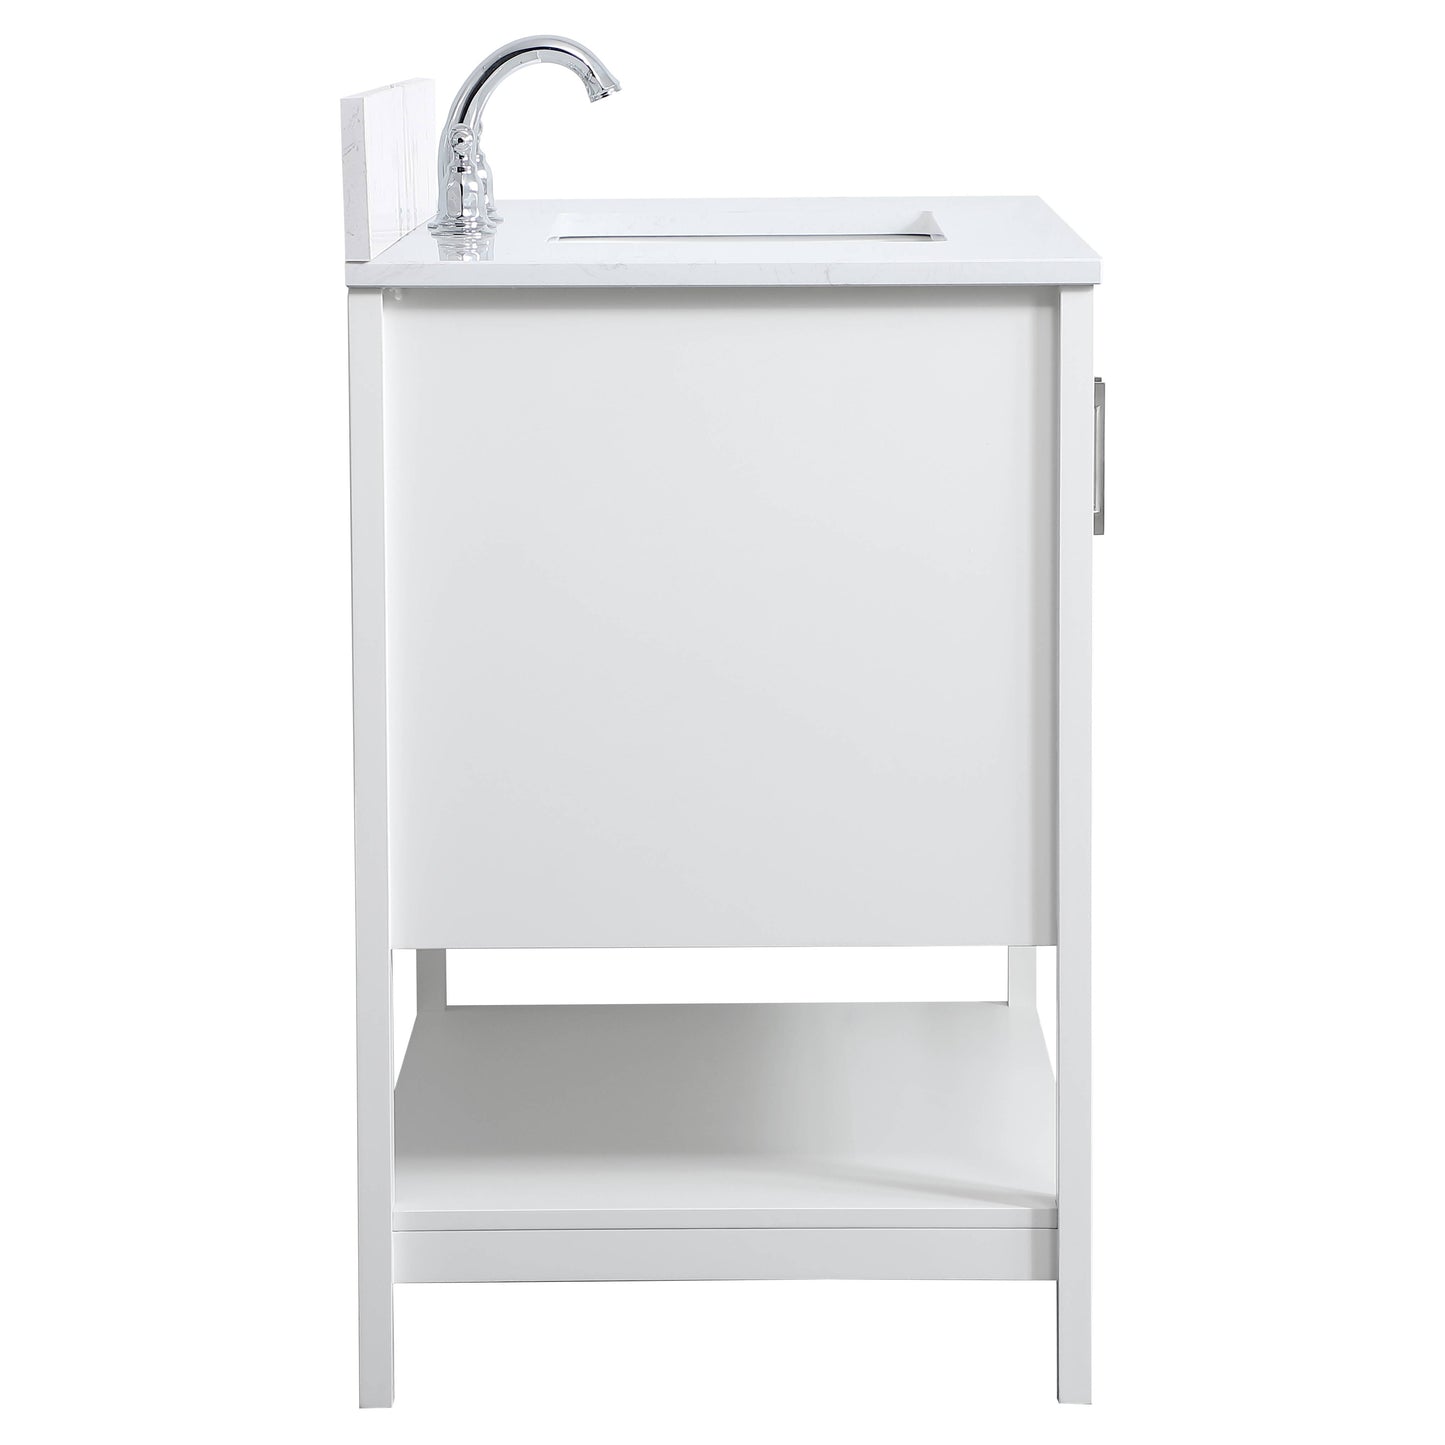 VF16036WH-BS 36" Single Bathroom Vanity in White With Backsplash